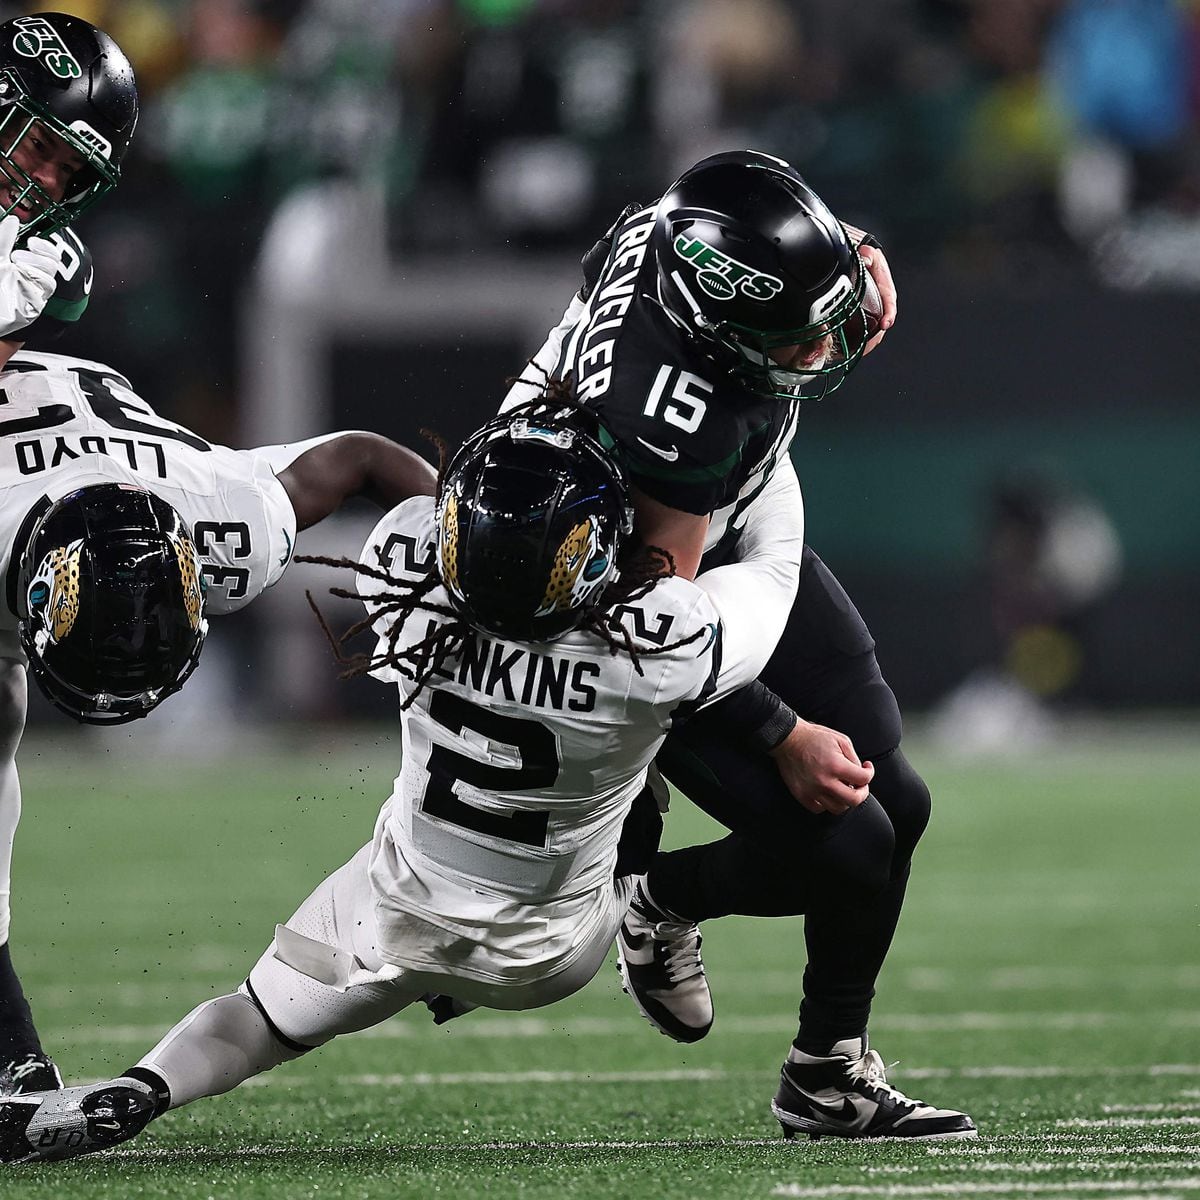 Jaguars vs. Colts game recap, score, highlights from NFL Week 6